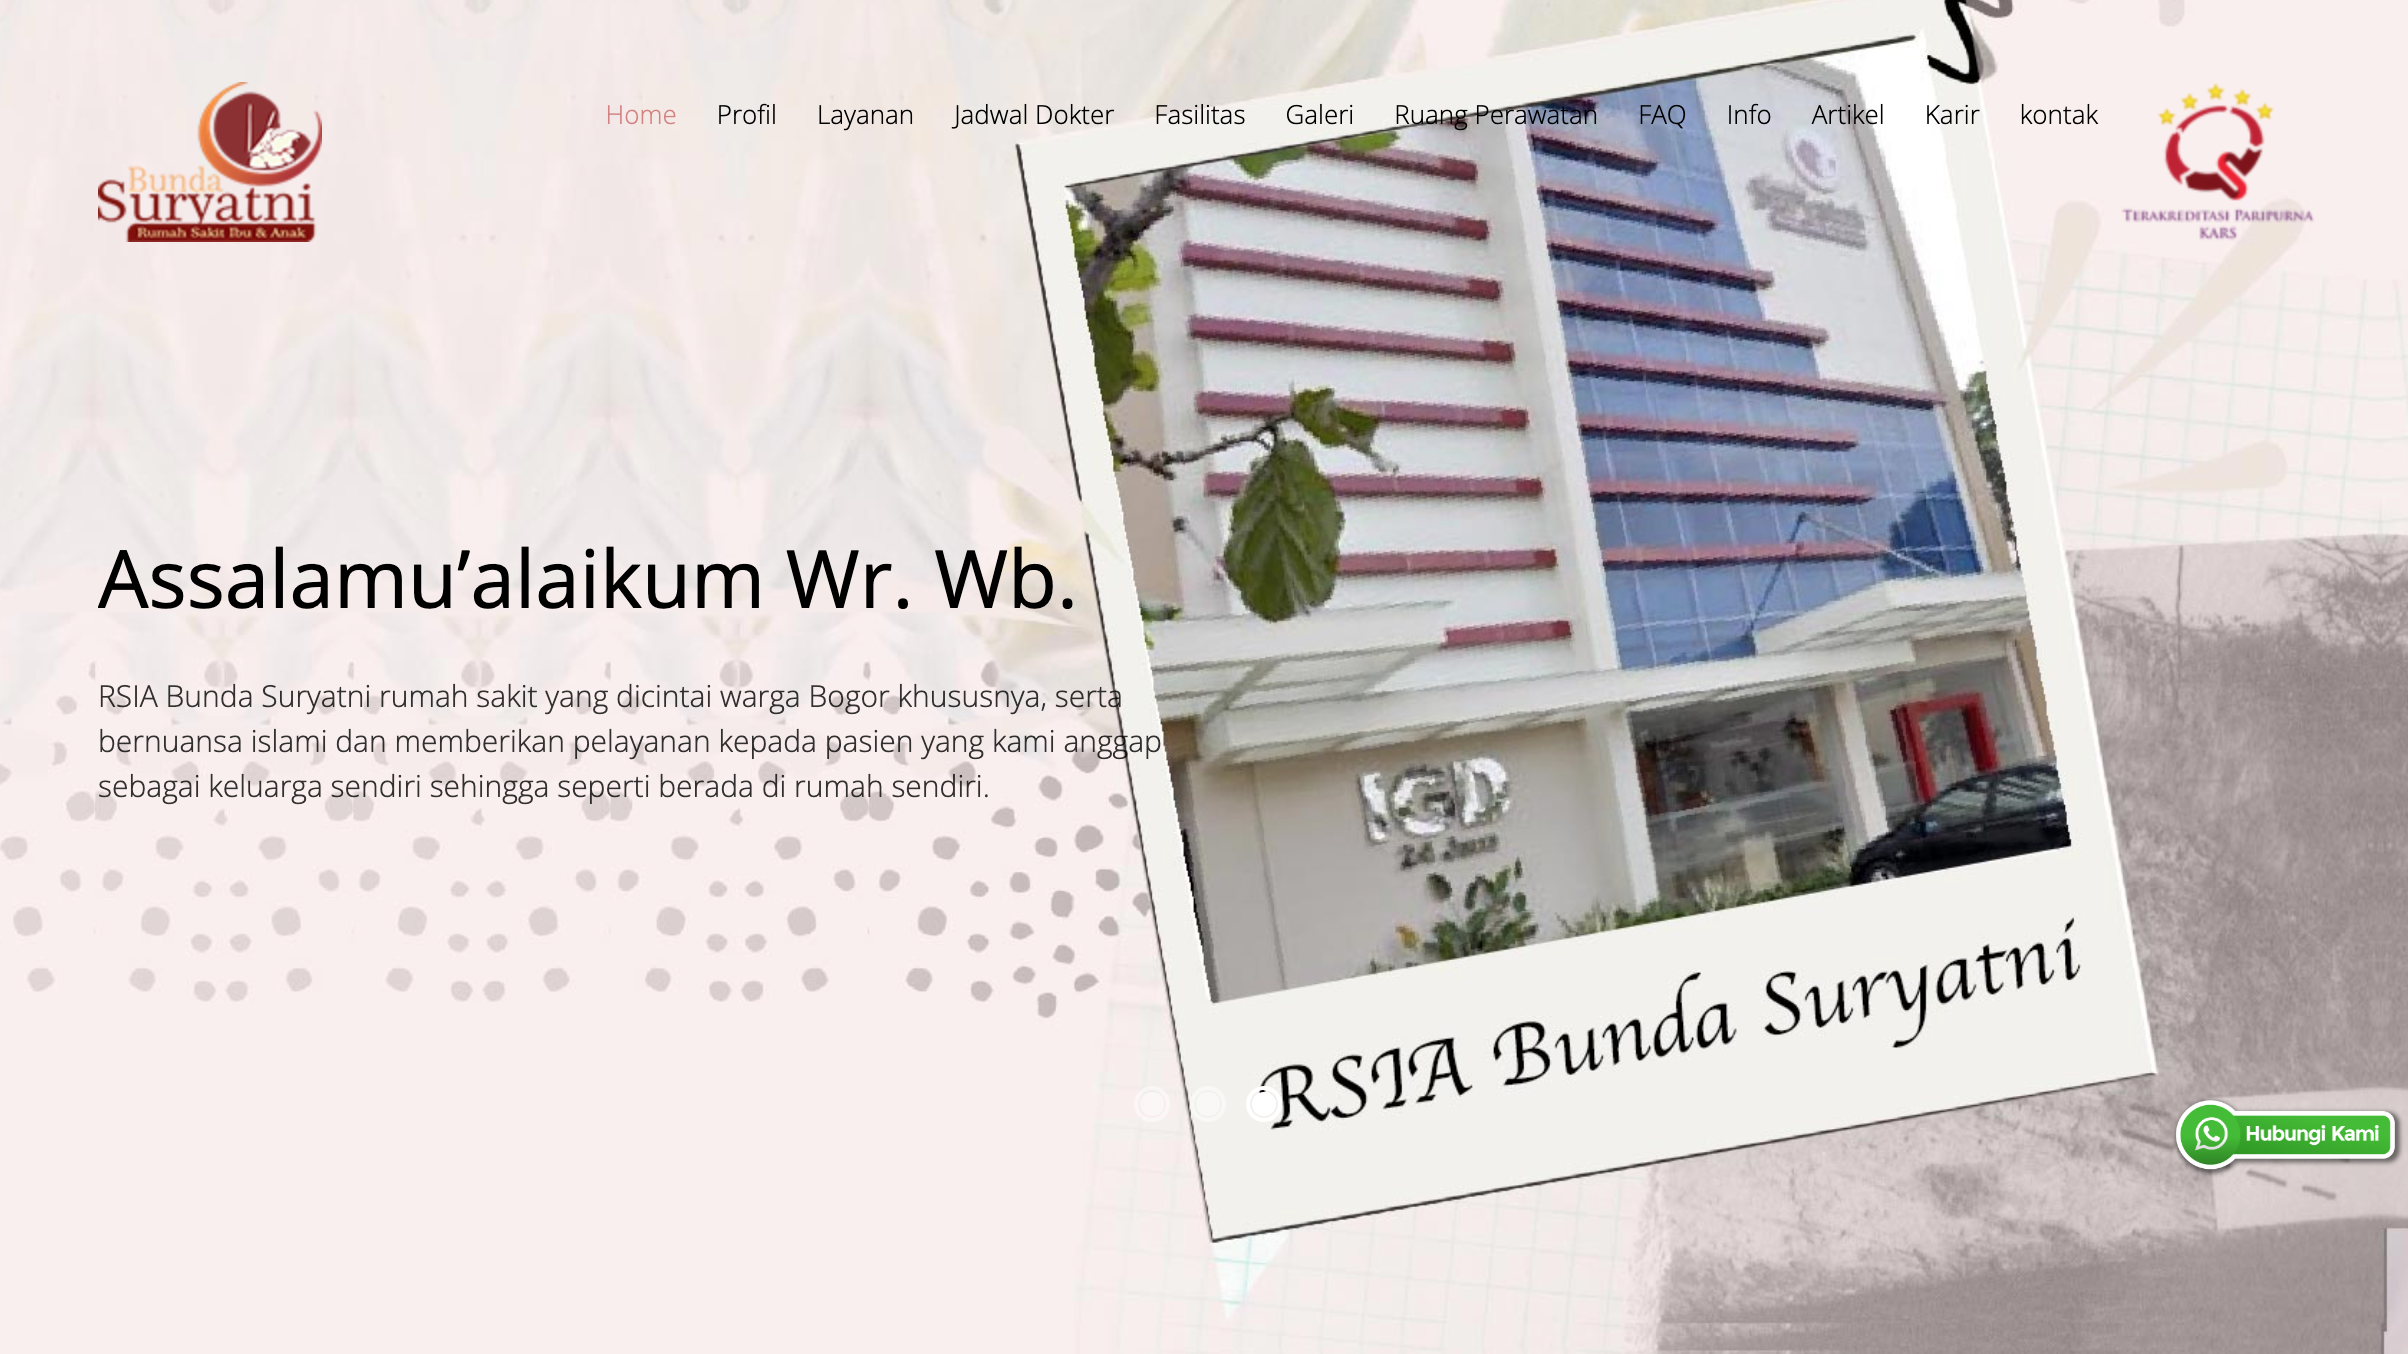 Image Hospital of Bunda Suryatni Website